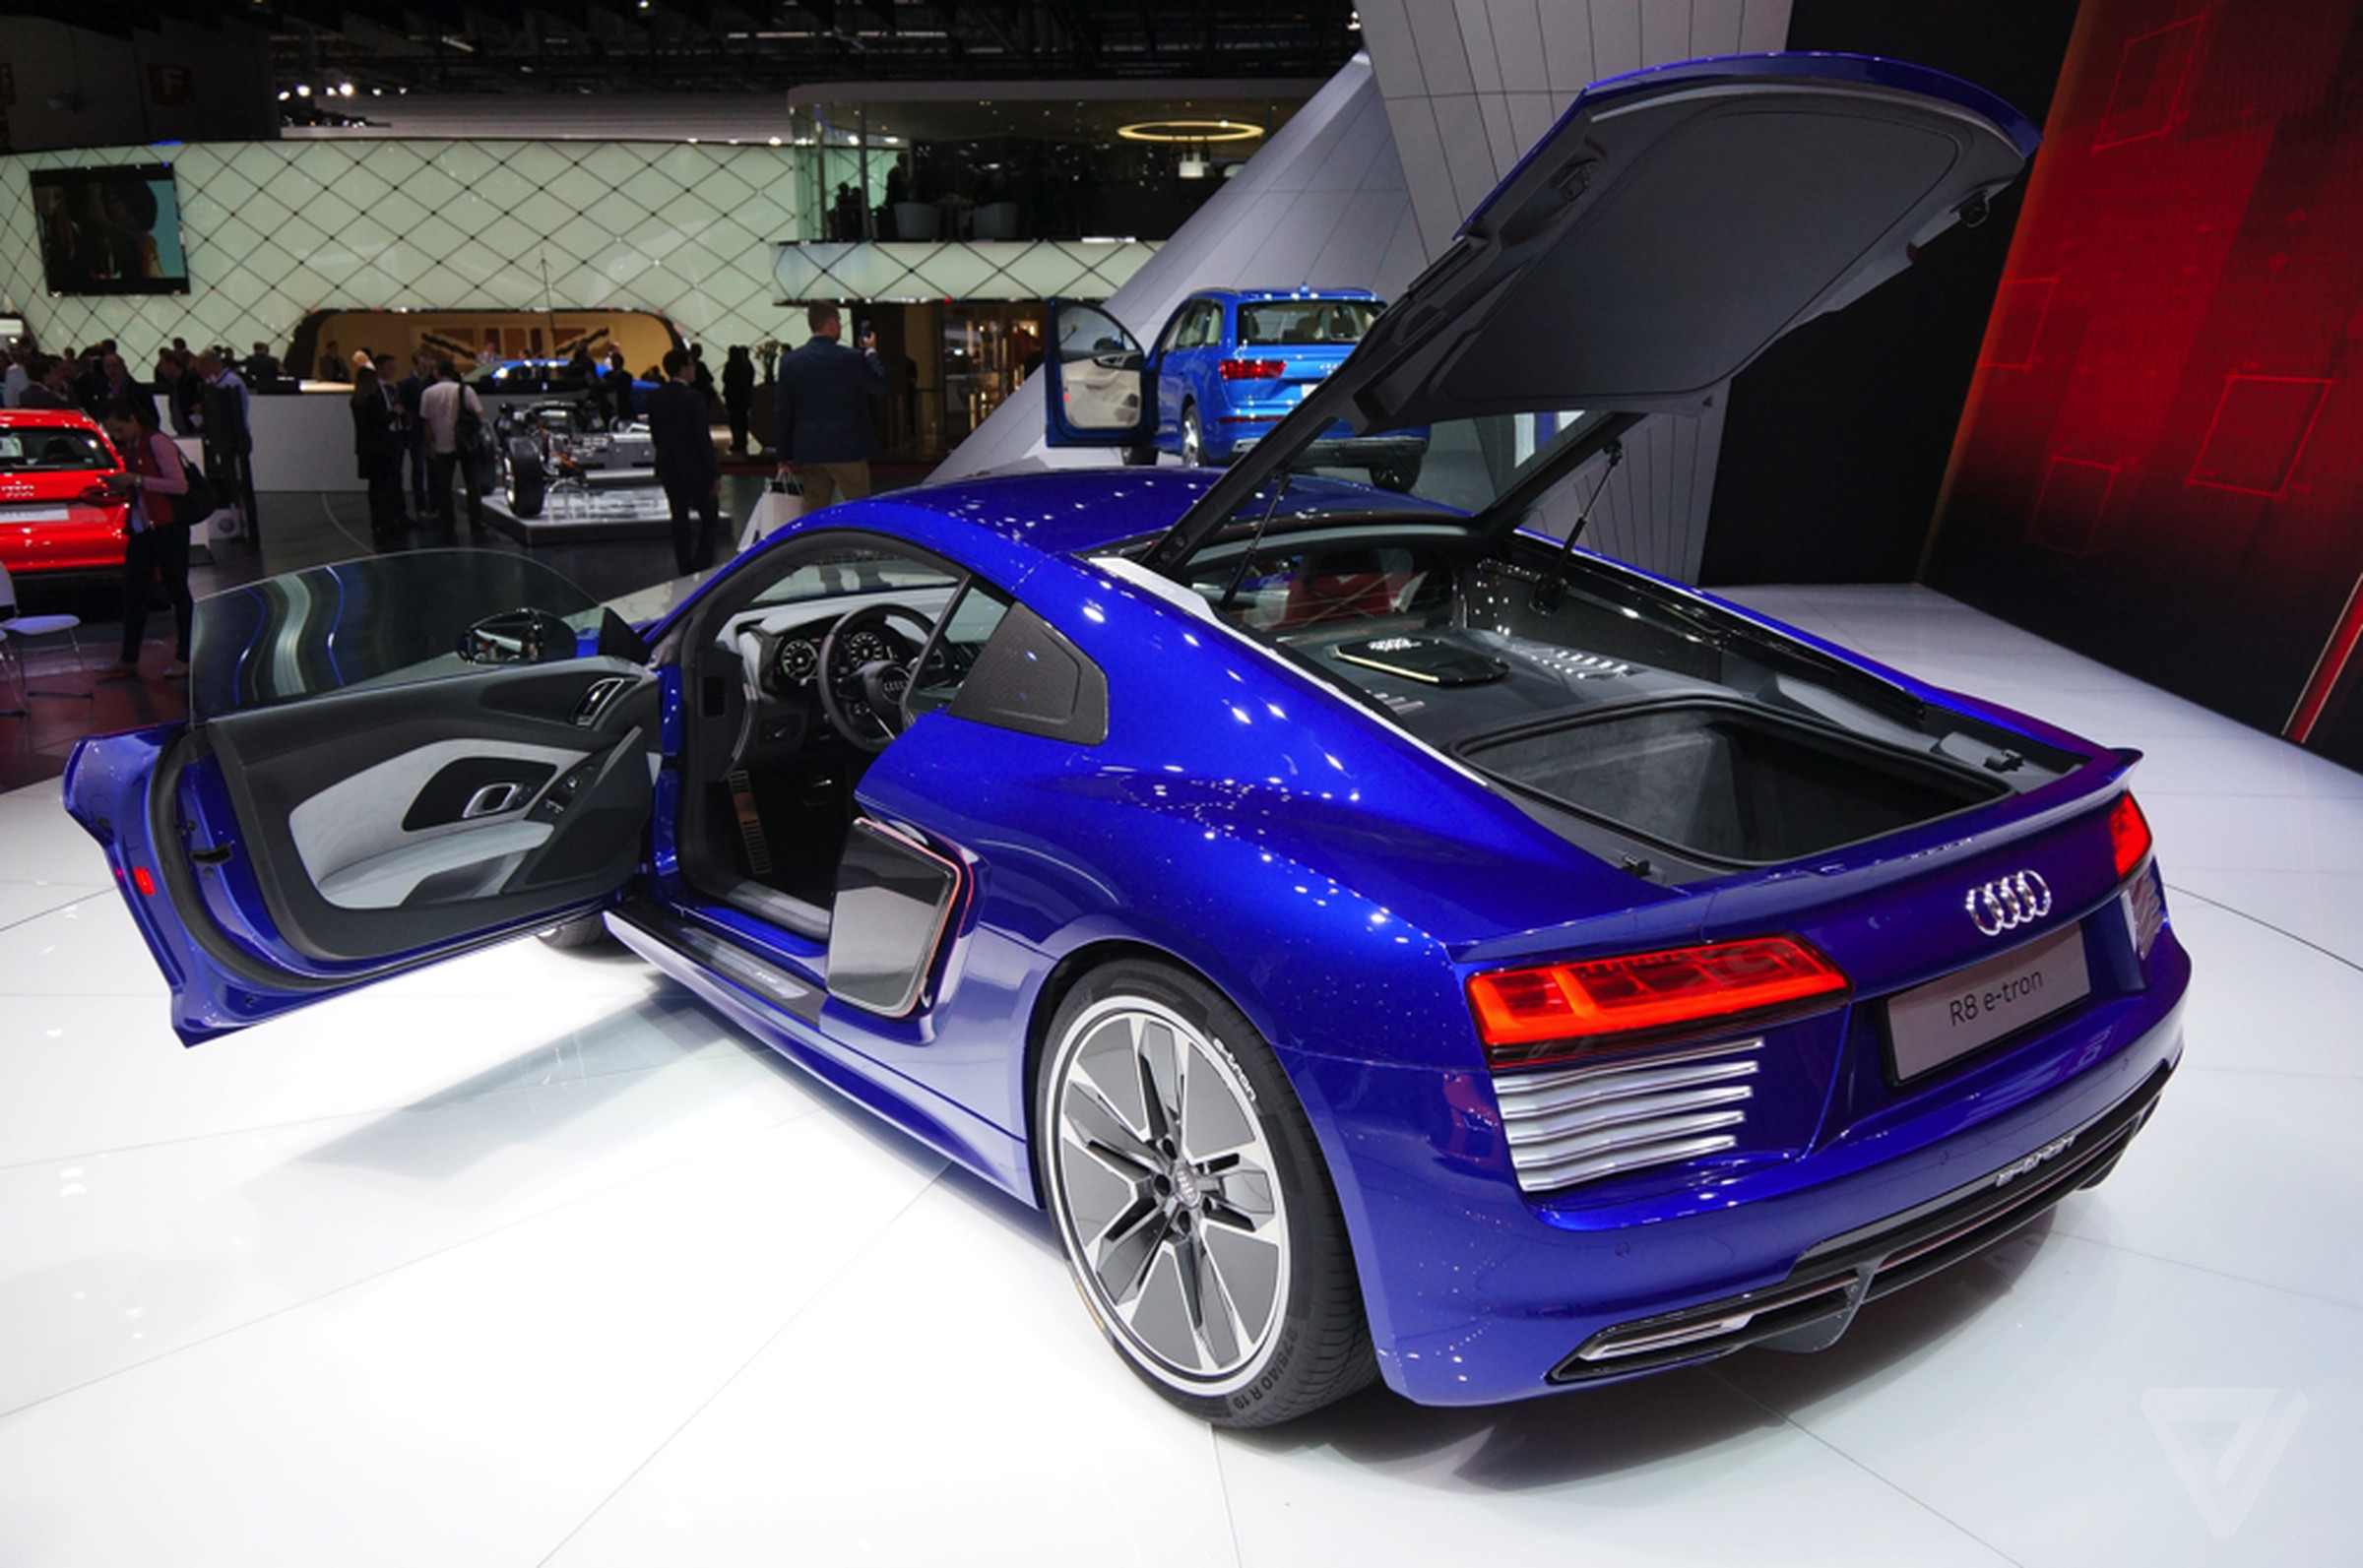 Audi R8 e-tron at the Geneva Motor Show 2015